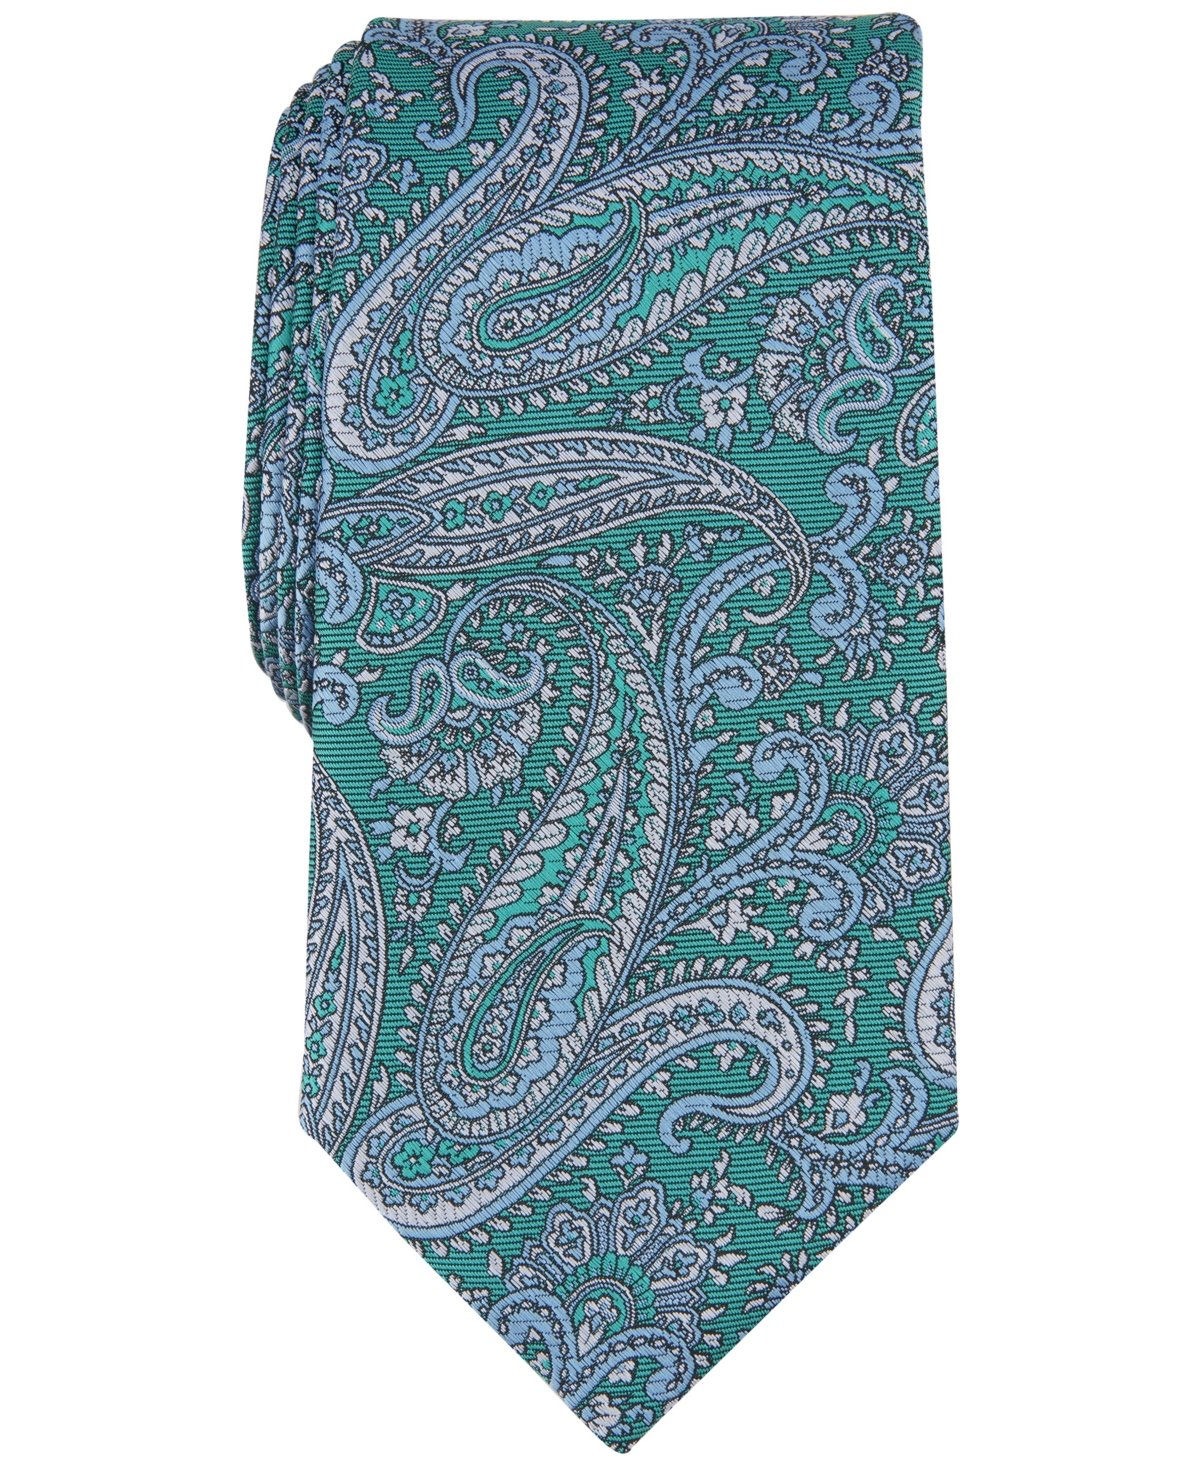 Men's Zachary Paisley Tie, Created for Macy's - Mint